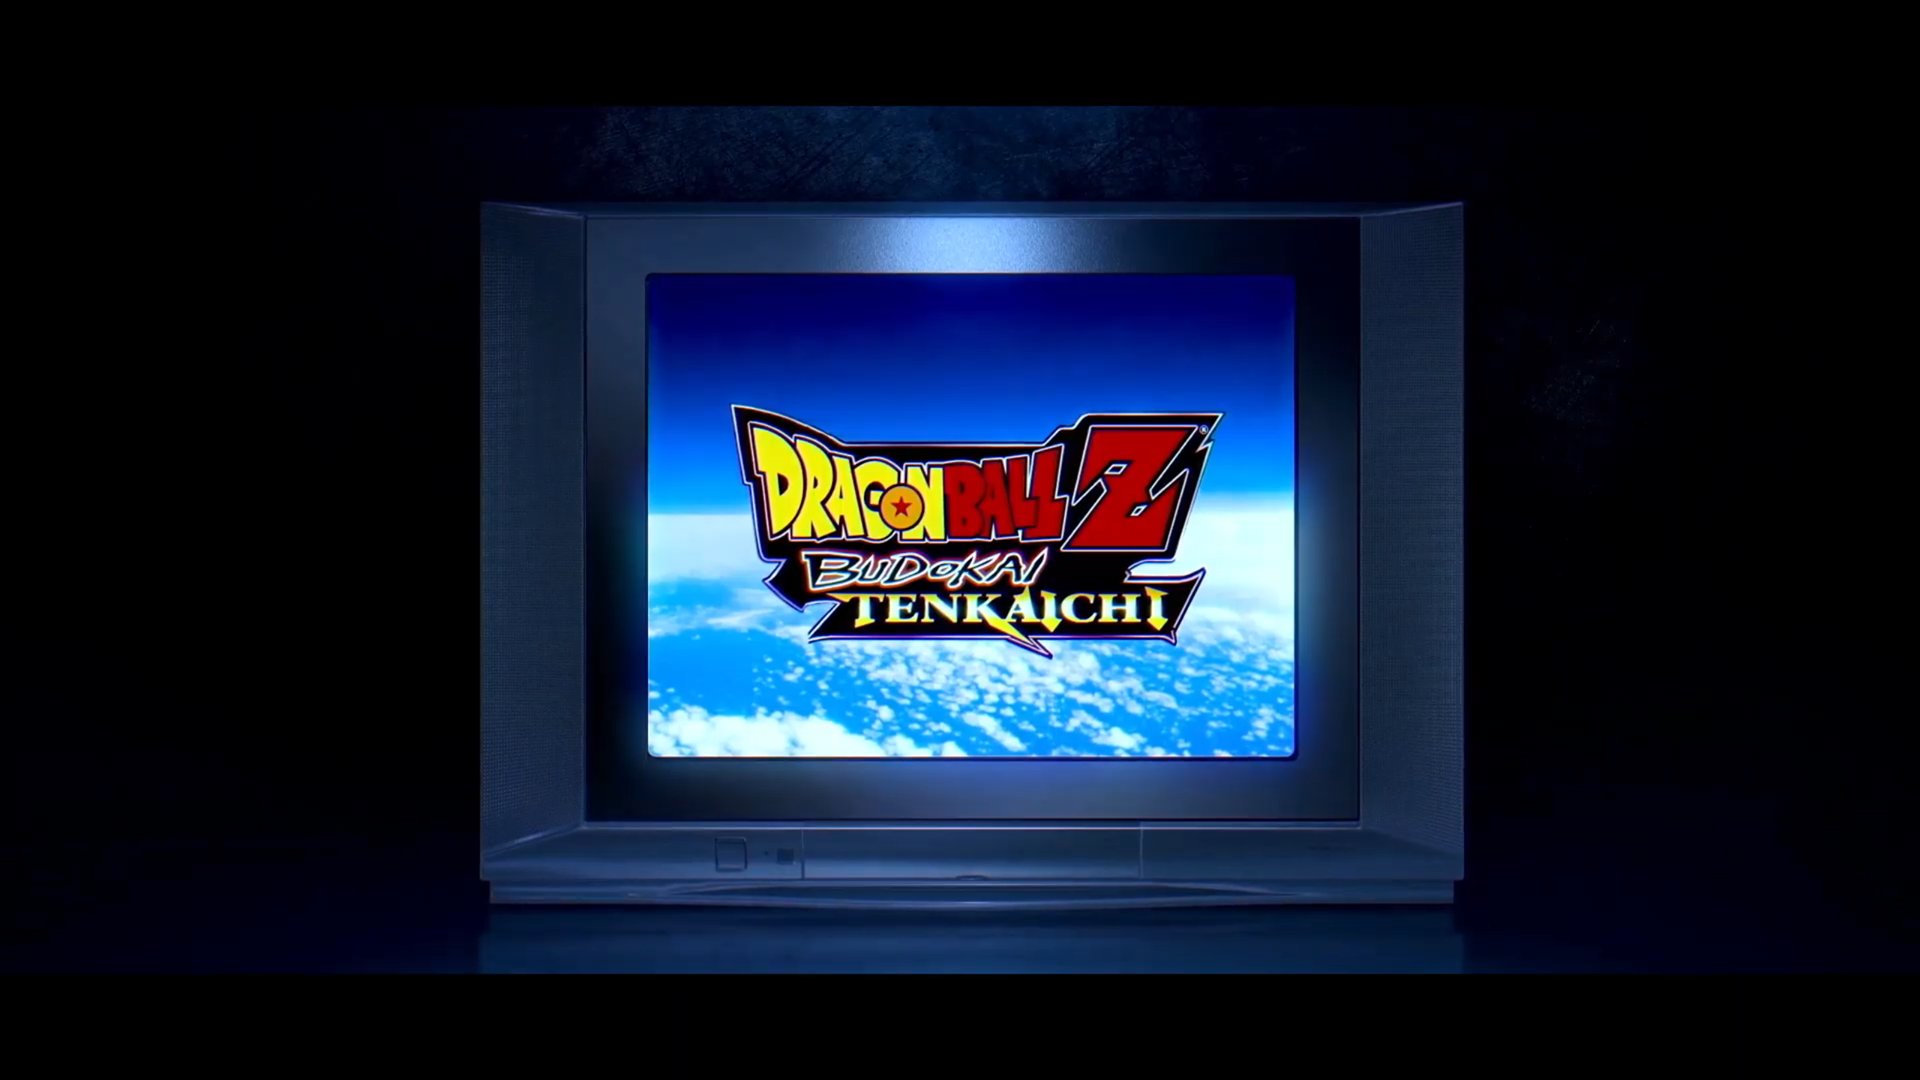 Dragon Ball Z: Budokai Tenkaichi 4 is reportedly arriving sooner than  people realize